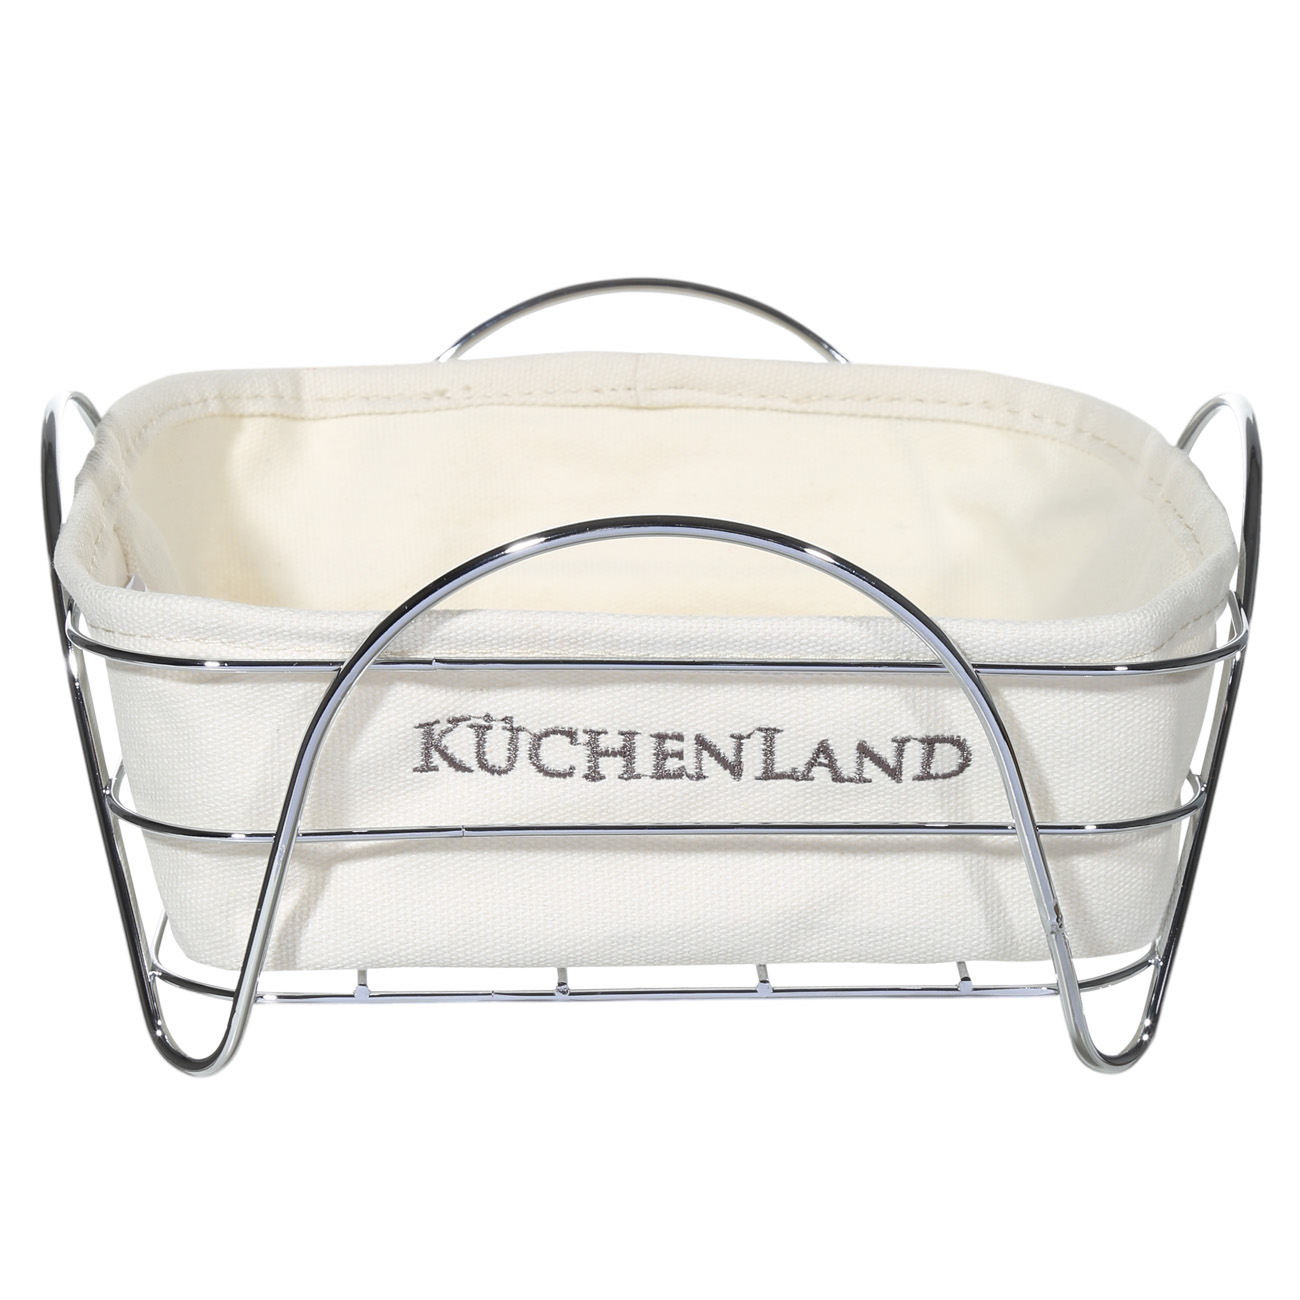 Kuchenland Корзина для хлеба, 21x21см, хлопок/сталь, квадратная, белая, Twist